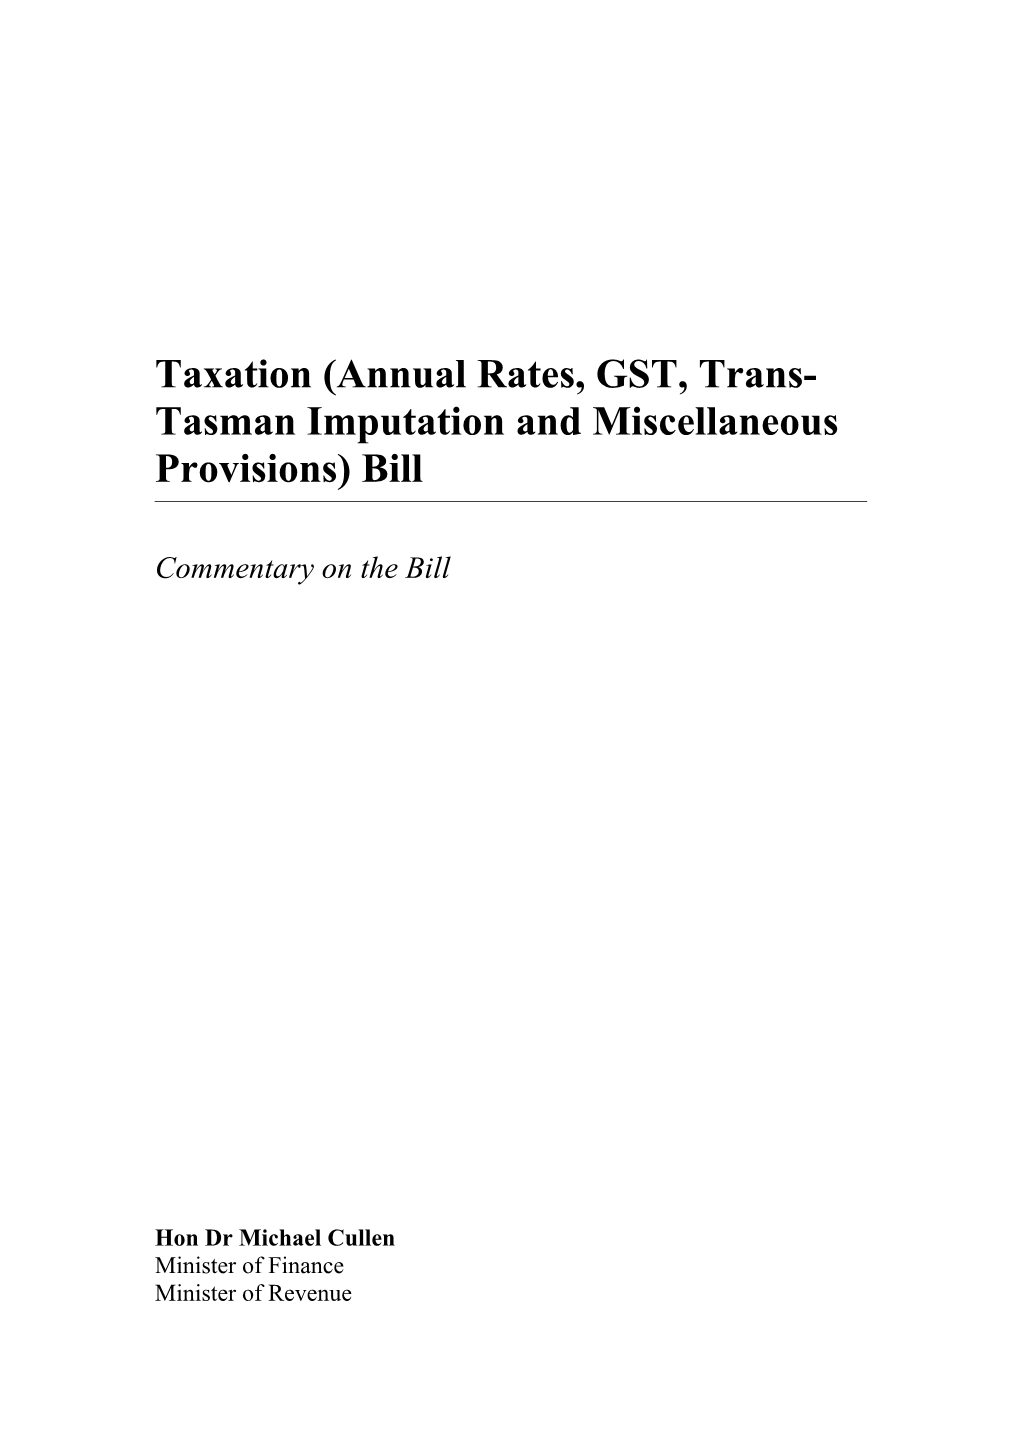 Taxation (Annual Rates, GST, Trans-Tasman Imputation and Miscellaneous Provisions) Bill